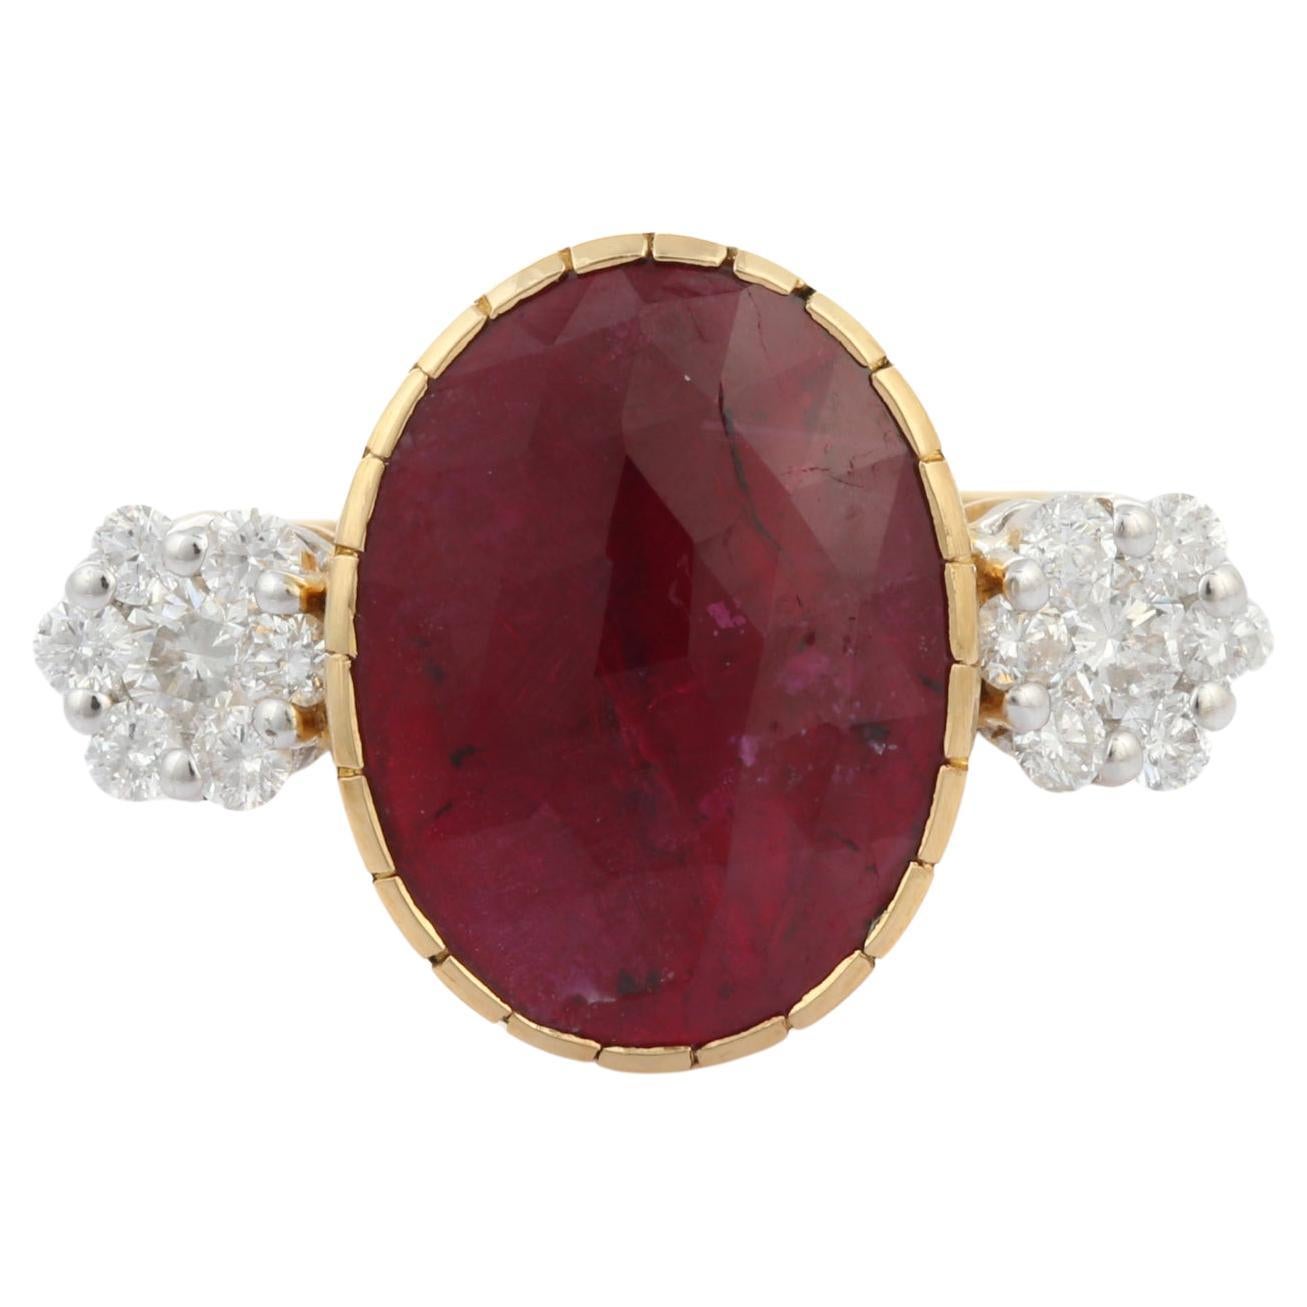 2.65 Carat Oval Cut Ruby Diamond Engagement Ring in 18 Karat Yellow Gold